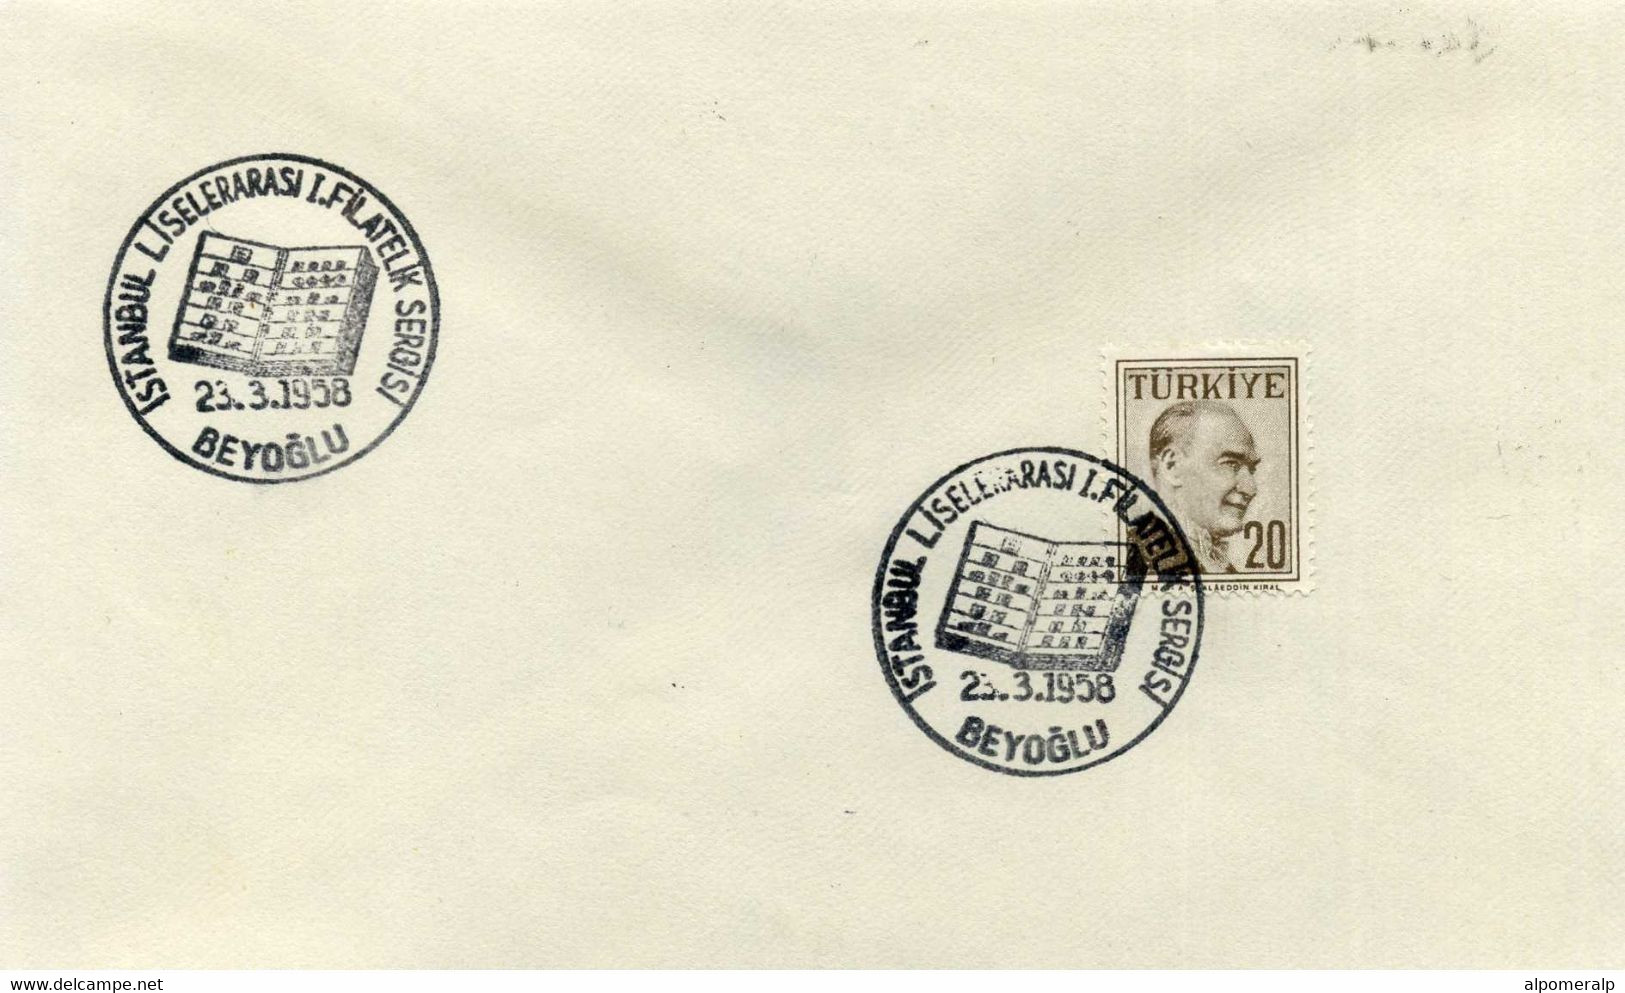 Turkey 1958 High Schools Philatelic Exhibition, Beyoglu, Mar. 23. | Book | Special Postmark - Covers & Documents